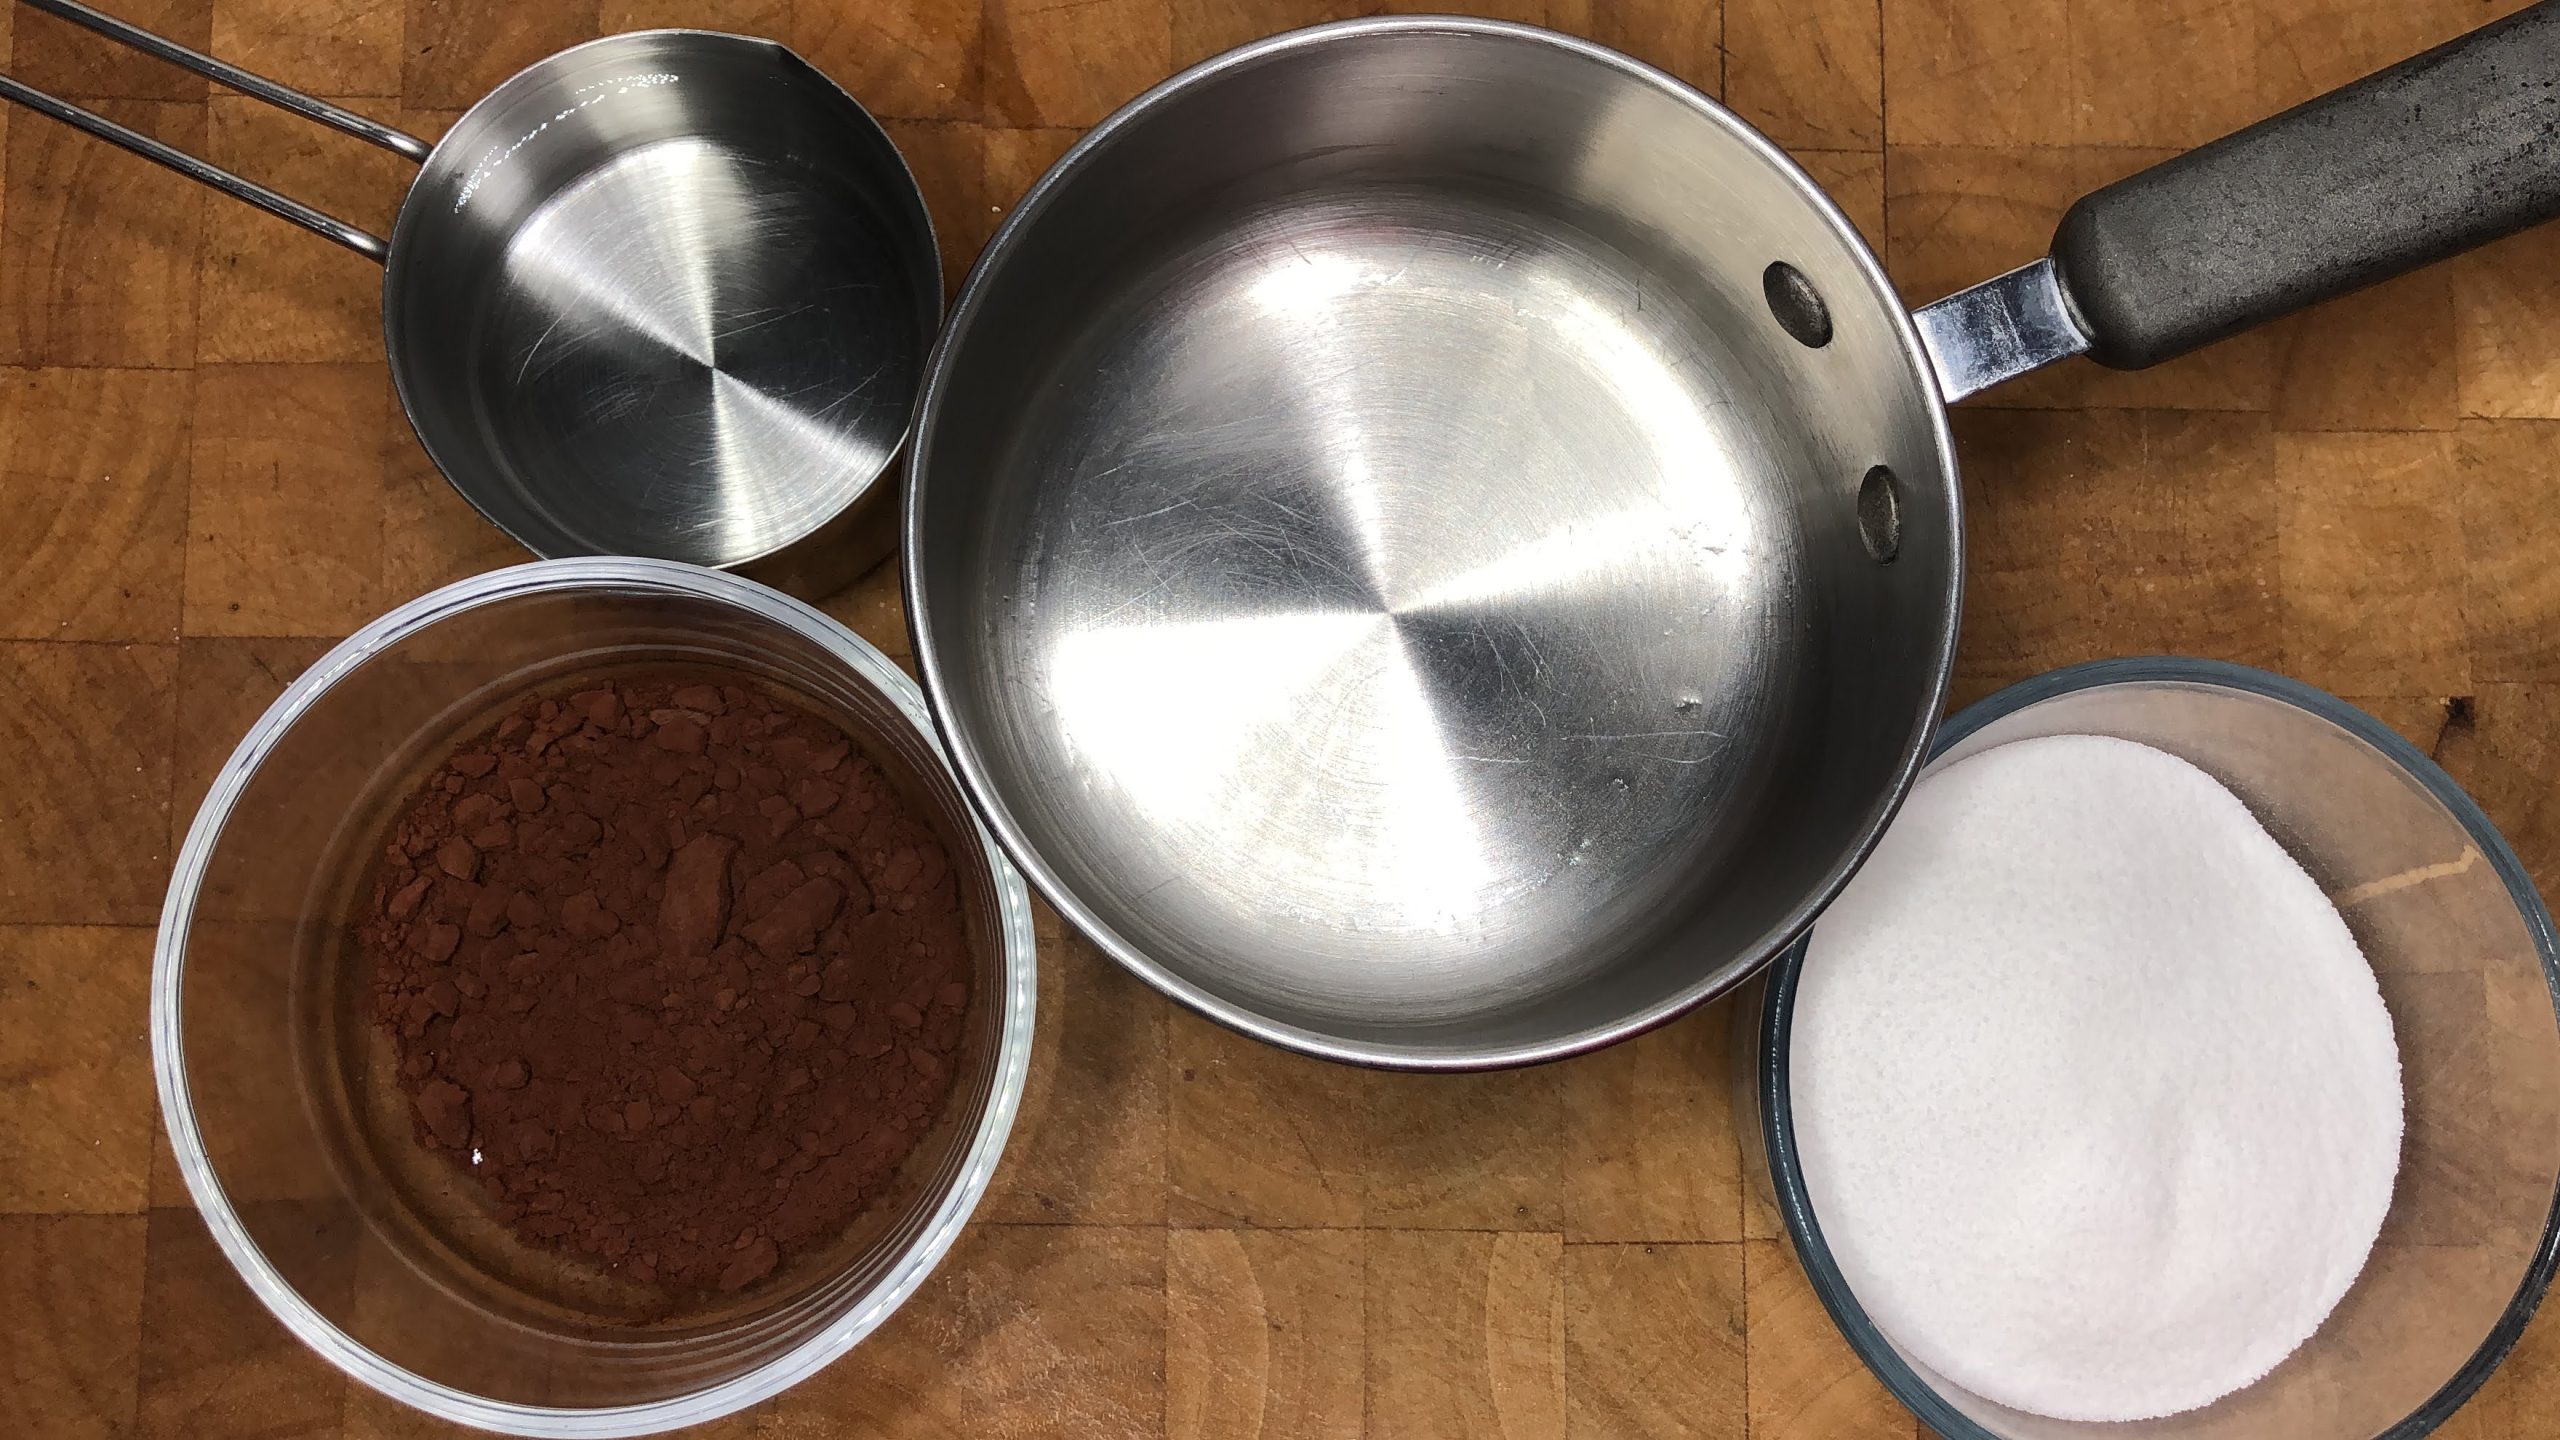 Bowls of chocolate, sugar and water next to a saucepan.